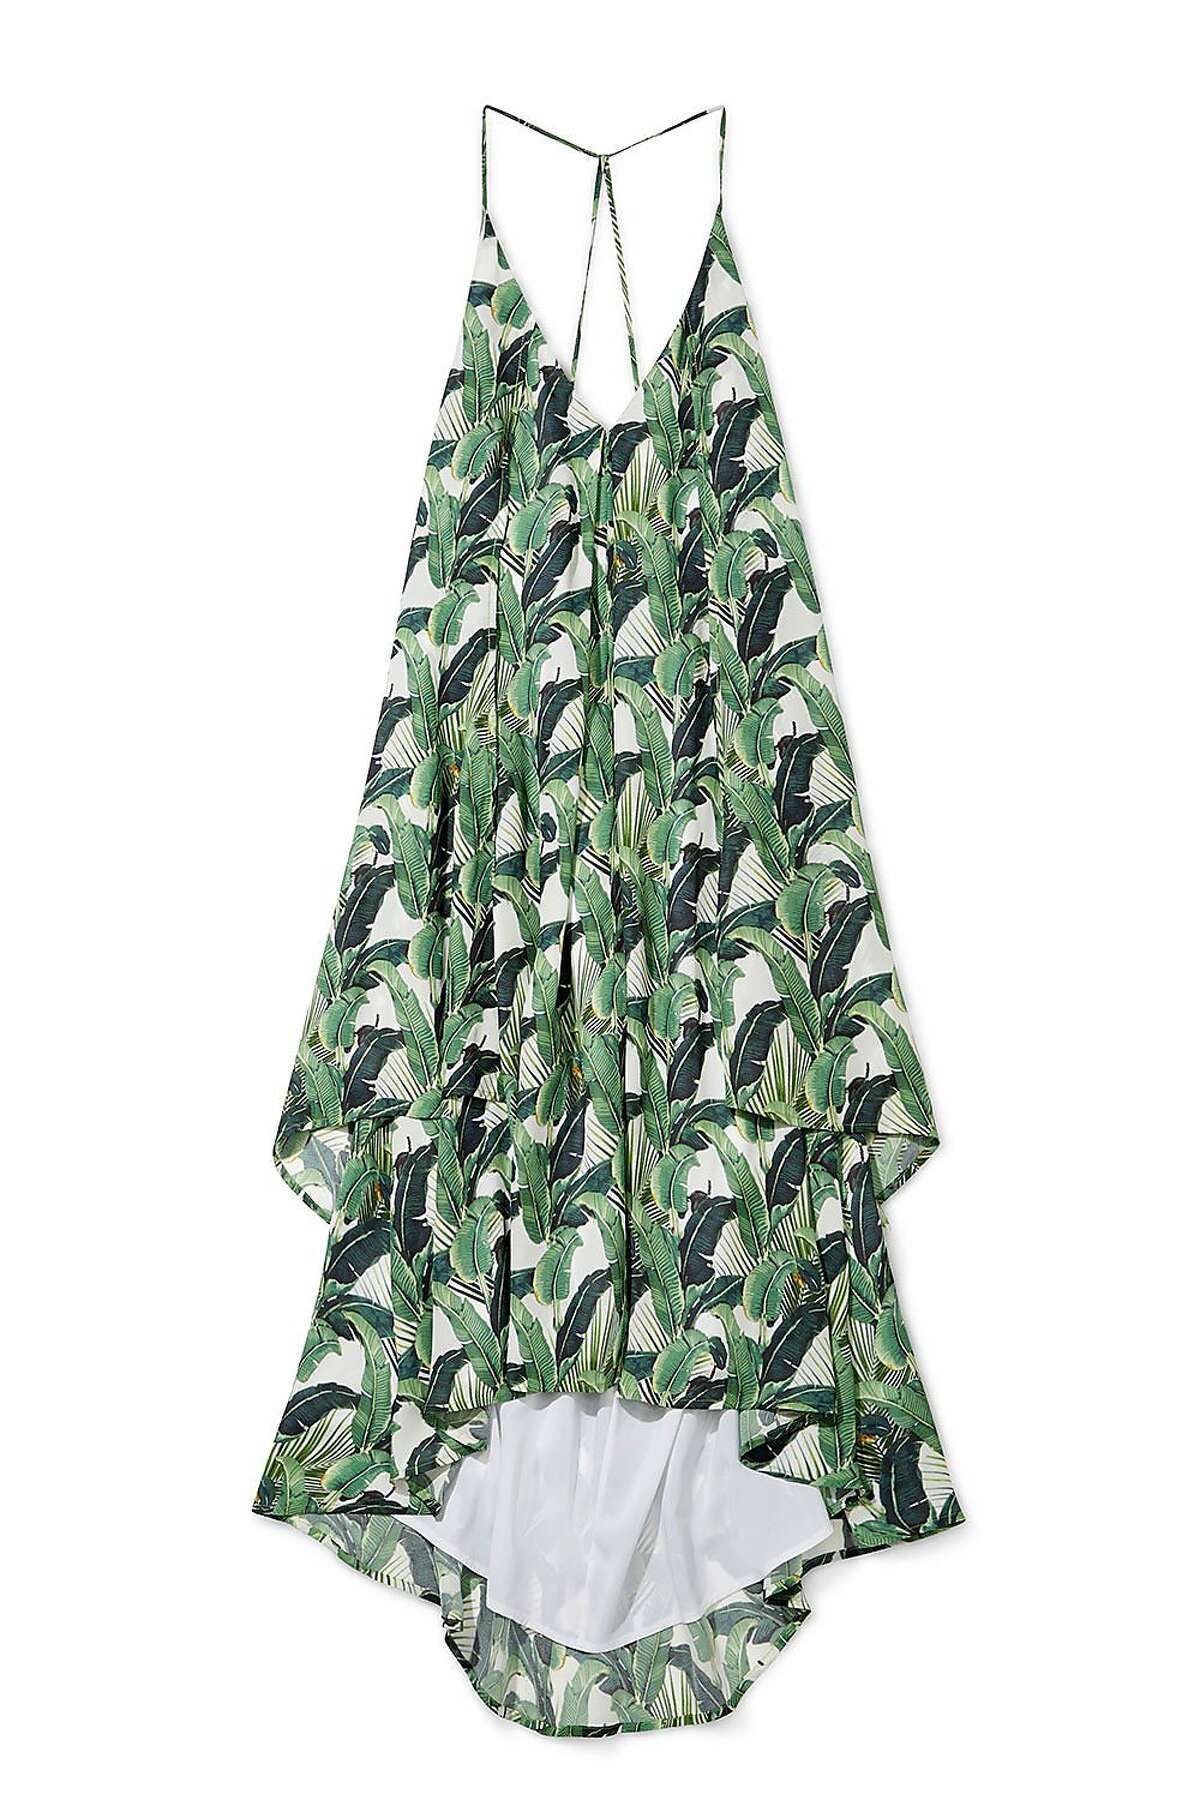 Rebecca Minkoff's Lena jungle-print dress is a spring 2015 style.